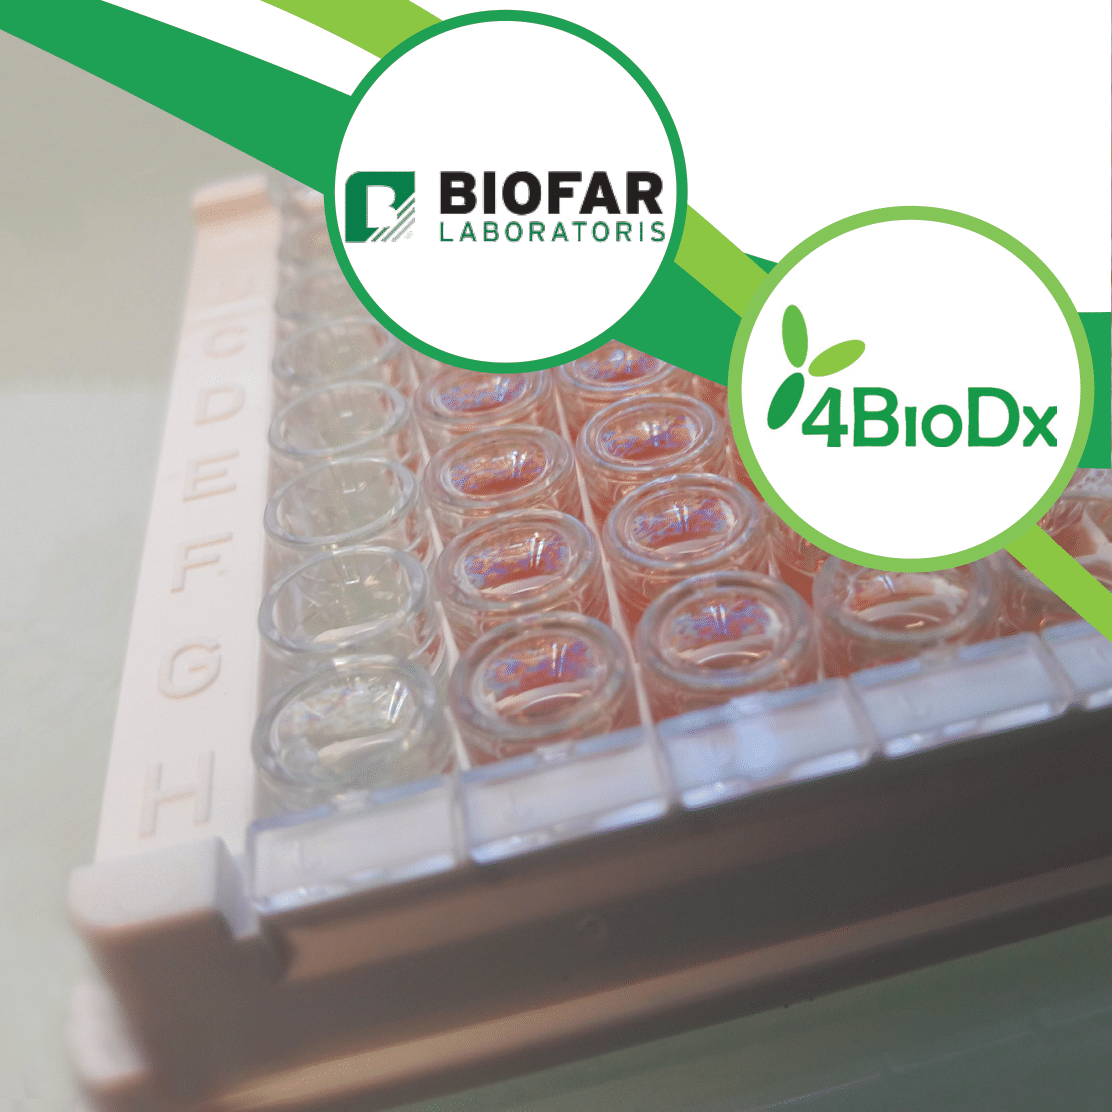 BIOFAR Laboratoris, our partner for the Pig 4MID Kit analyses-image